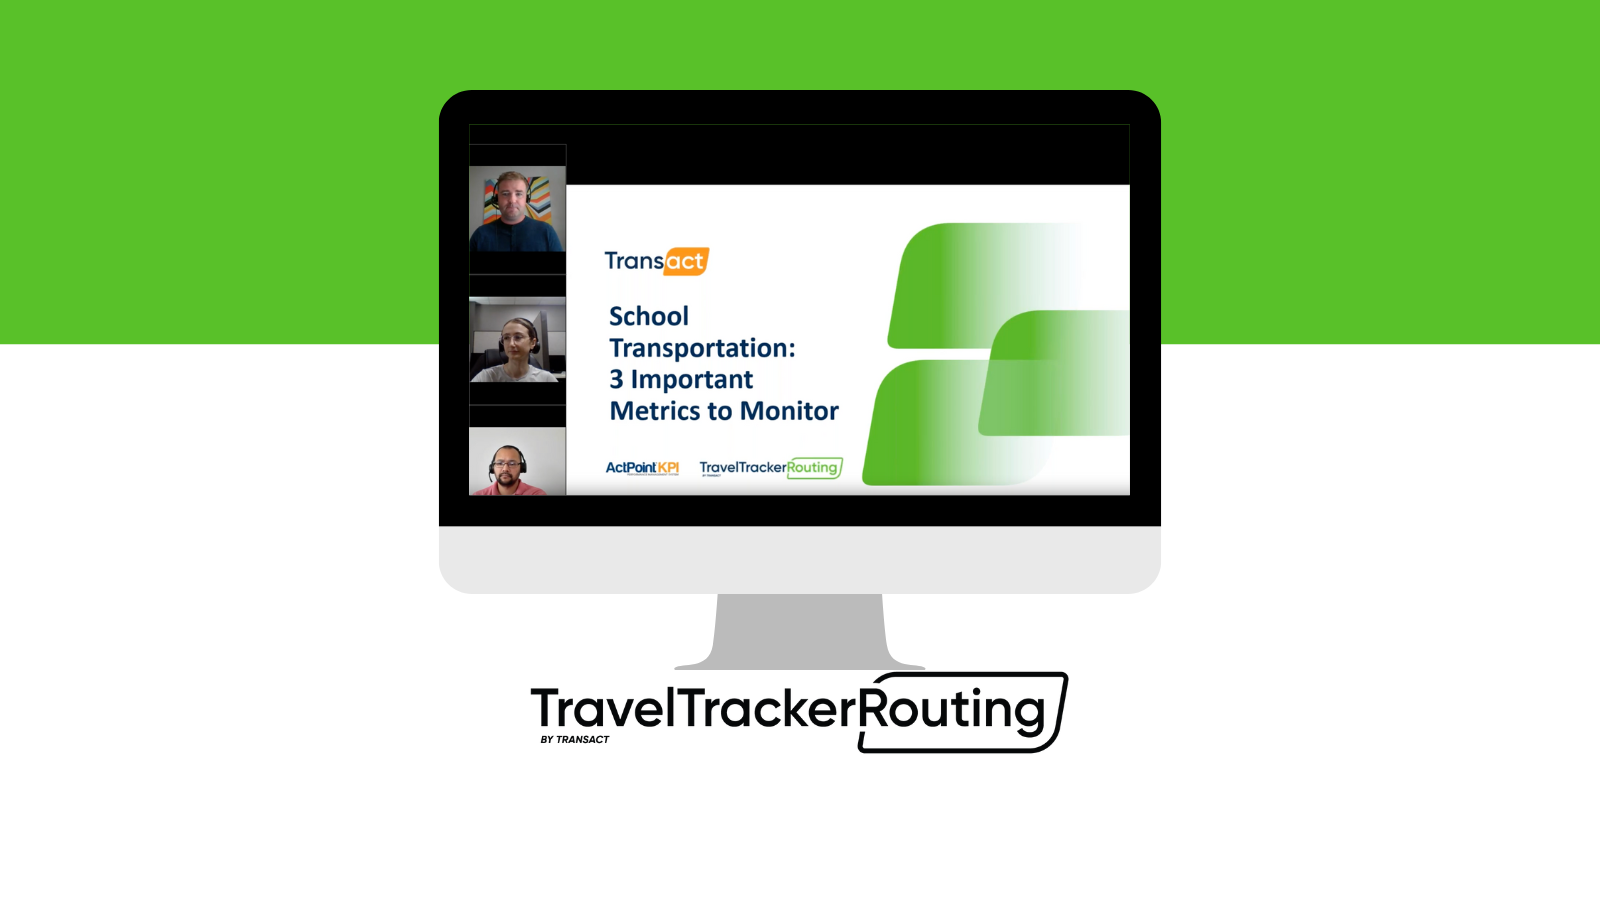 School Transportation: 3 Important Metrics to Monitor